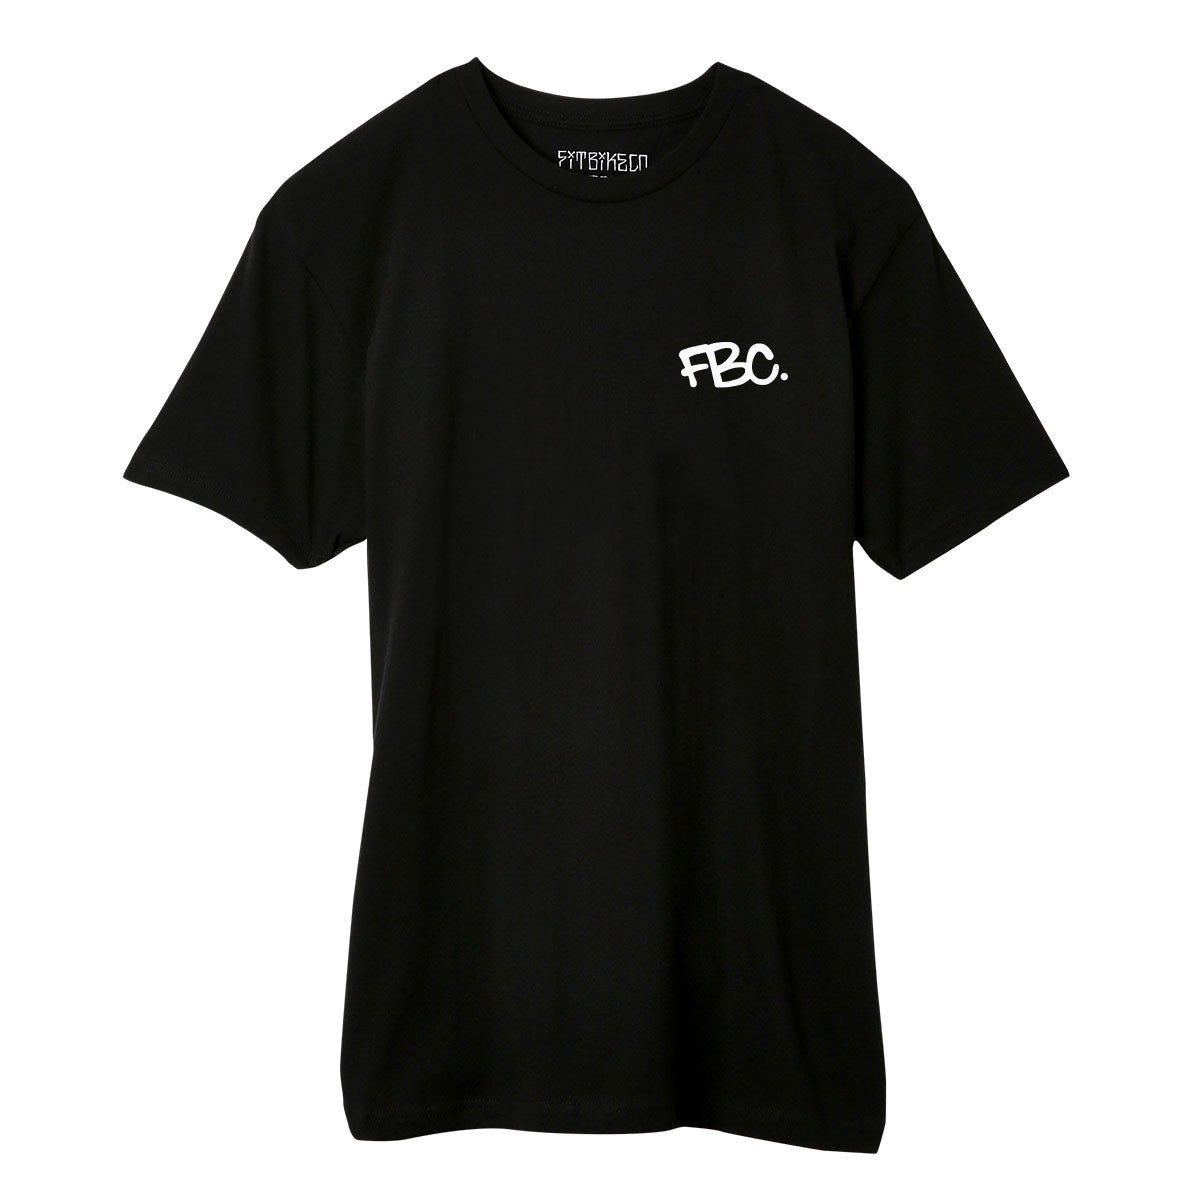 Passgenaues FBC-T-Shirt